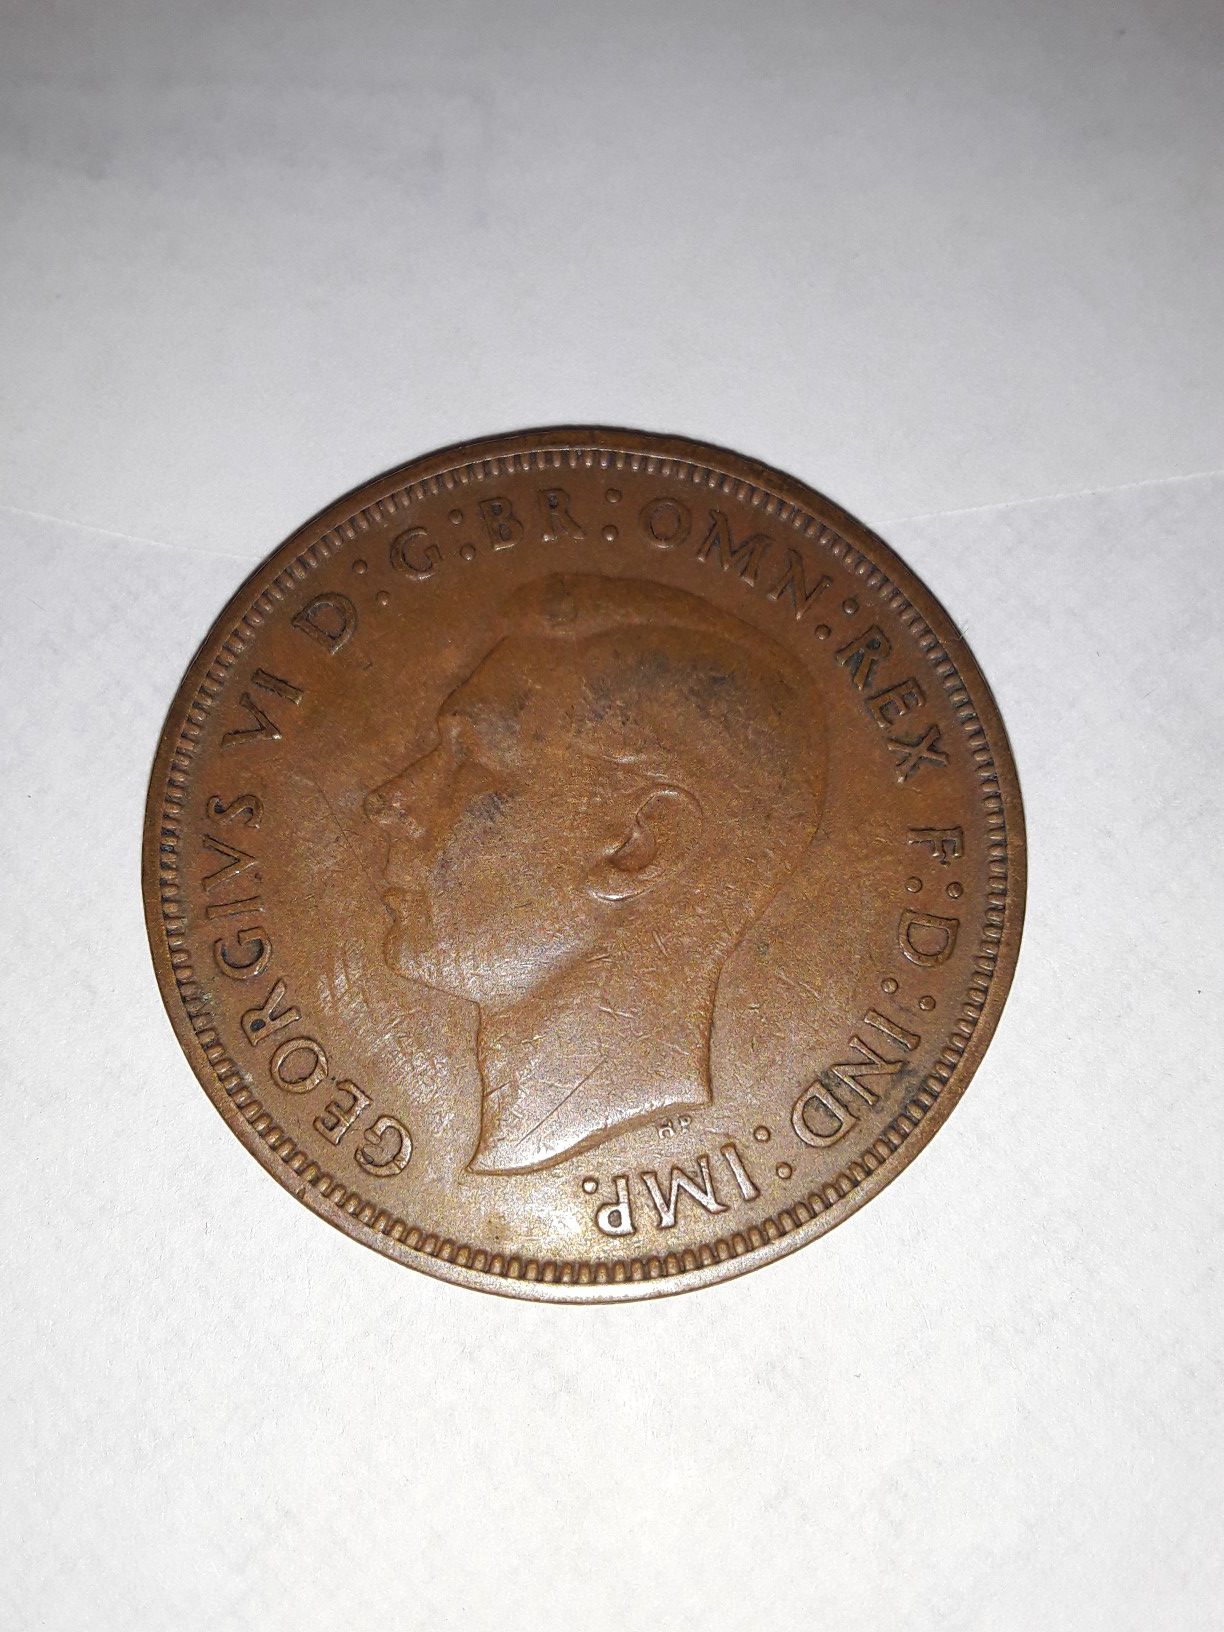 1938 British coin throw me an offer